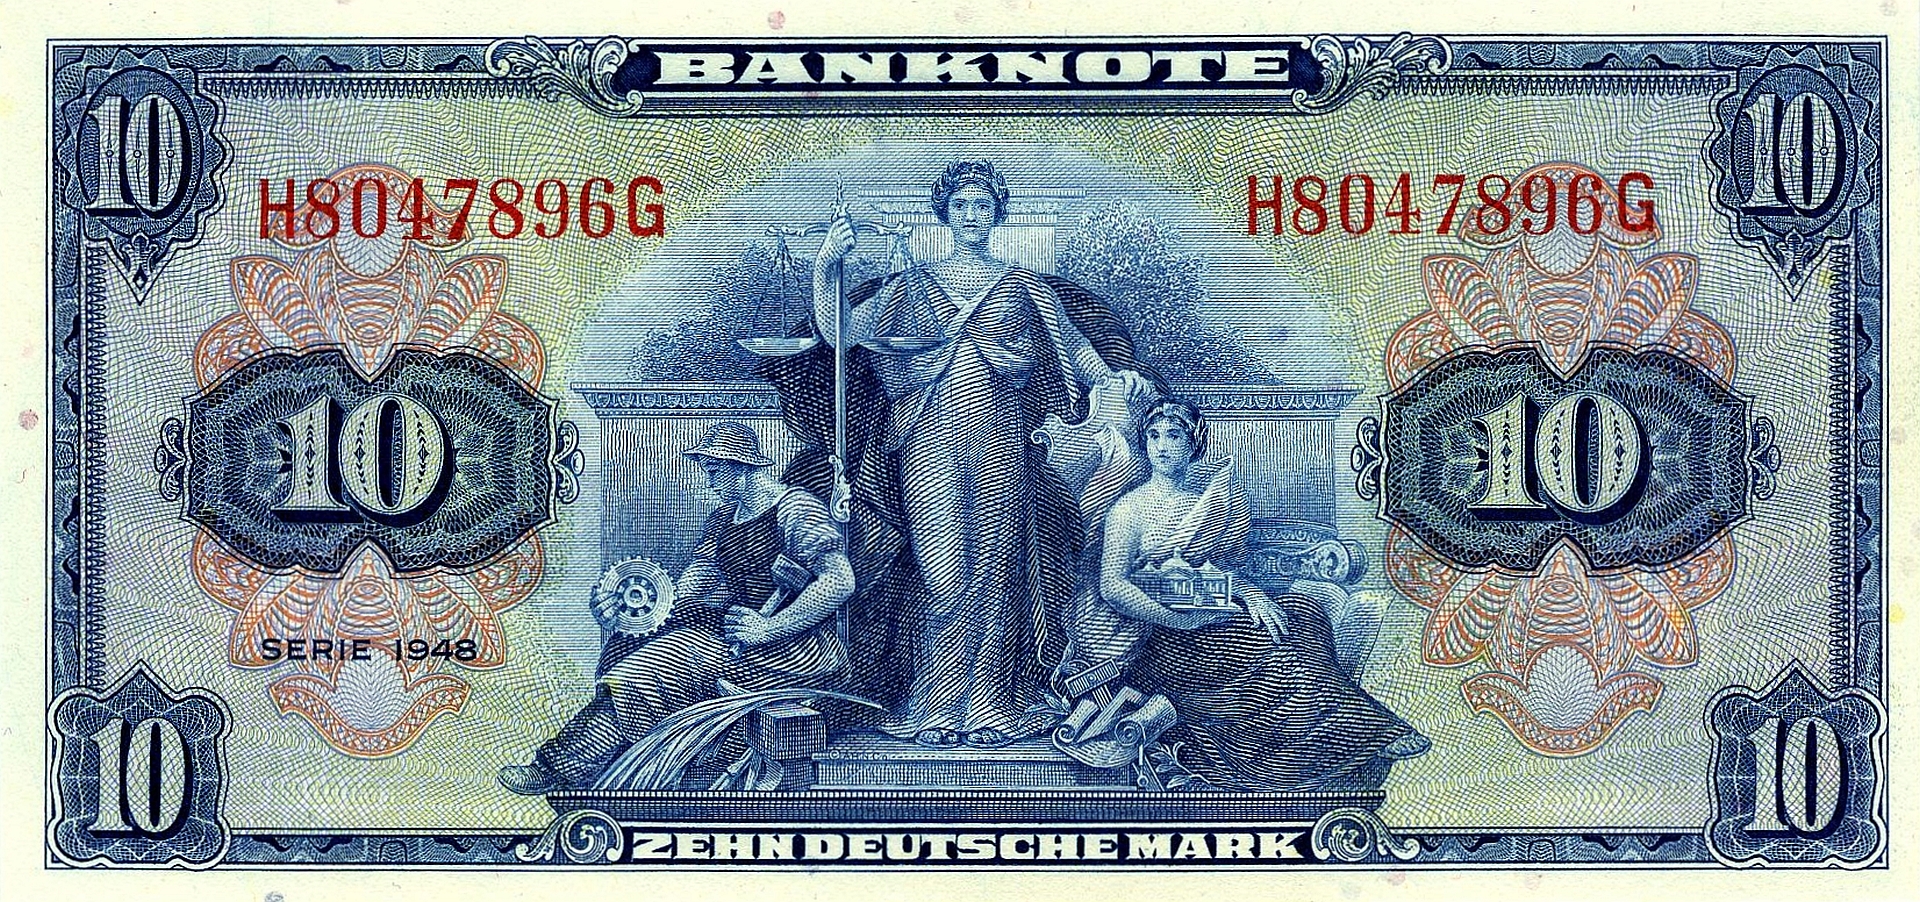 man made, deutsche mark, currencies